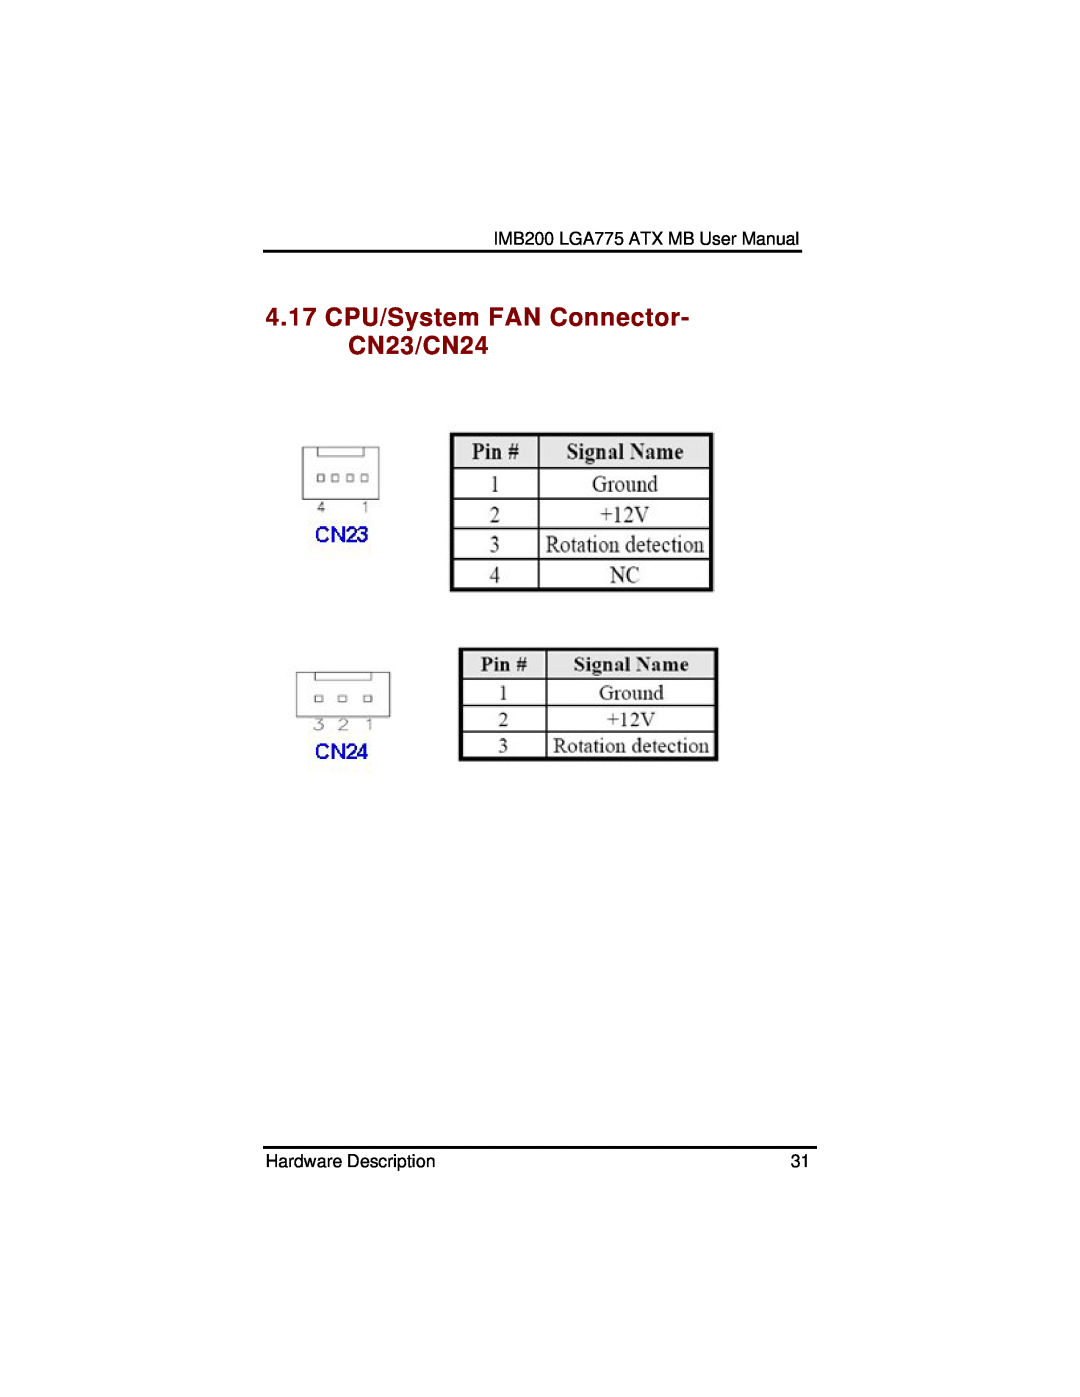 Intel IMB200VGE 4.17 CPU/System FAN Connector- CN23/CN24, IMB200 LGA775 ATX MB User Manual, Hardware Description 